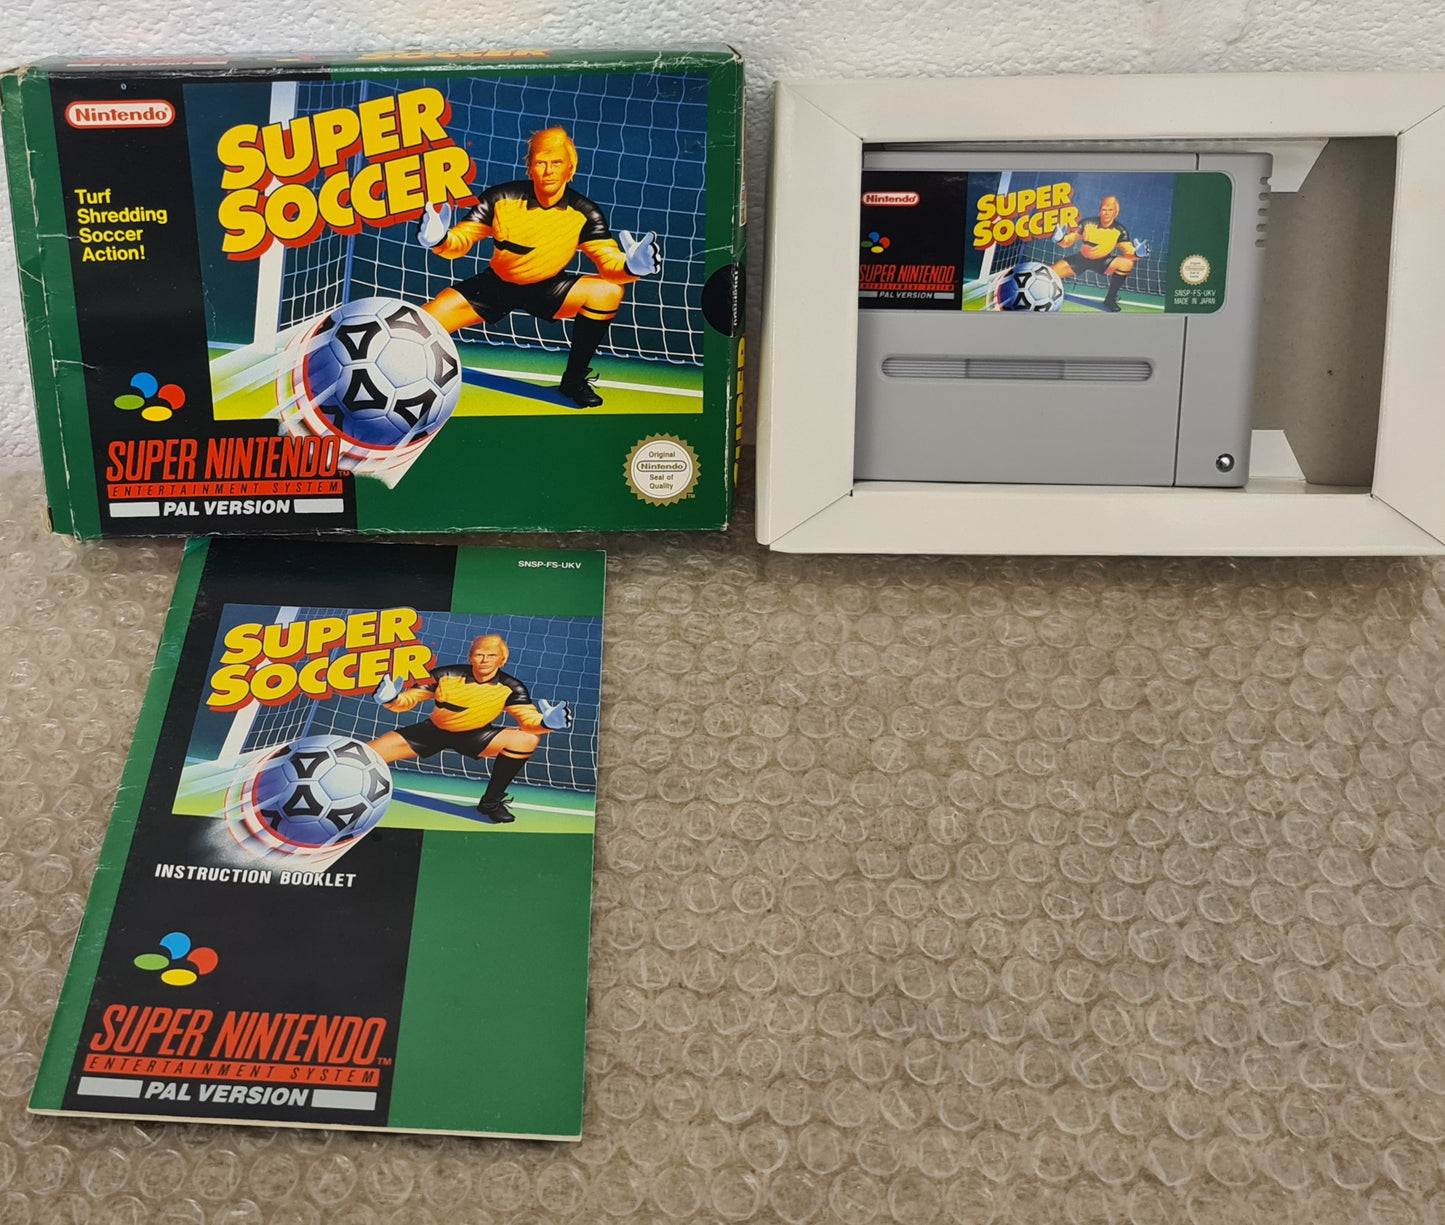 Super Soccer Super Nintendo Entertainment System (SNES) Game